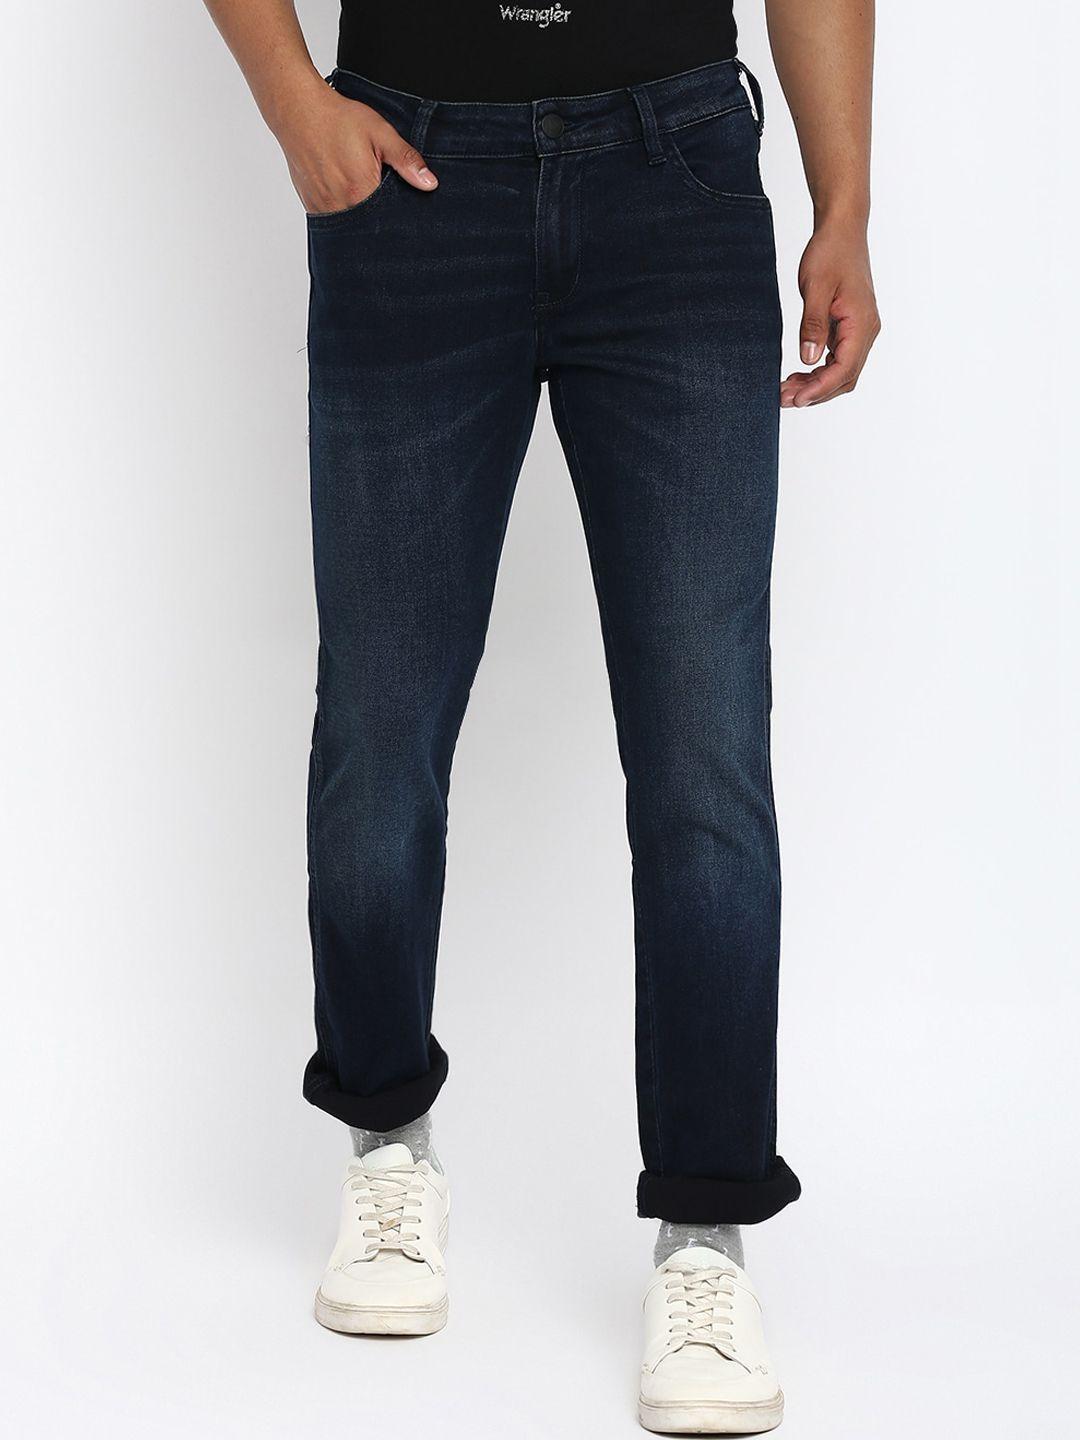 wrangler-men-navy-blue-slim-fit-low-rise-light-fade-cotton-stretchable-jeans